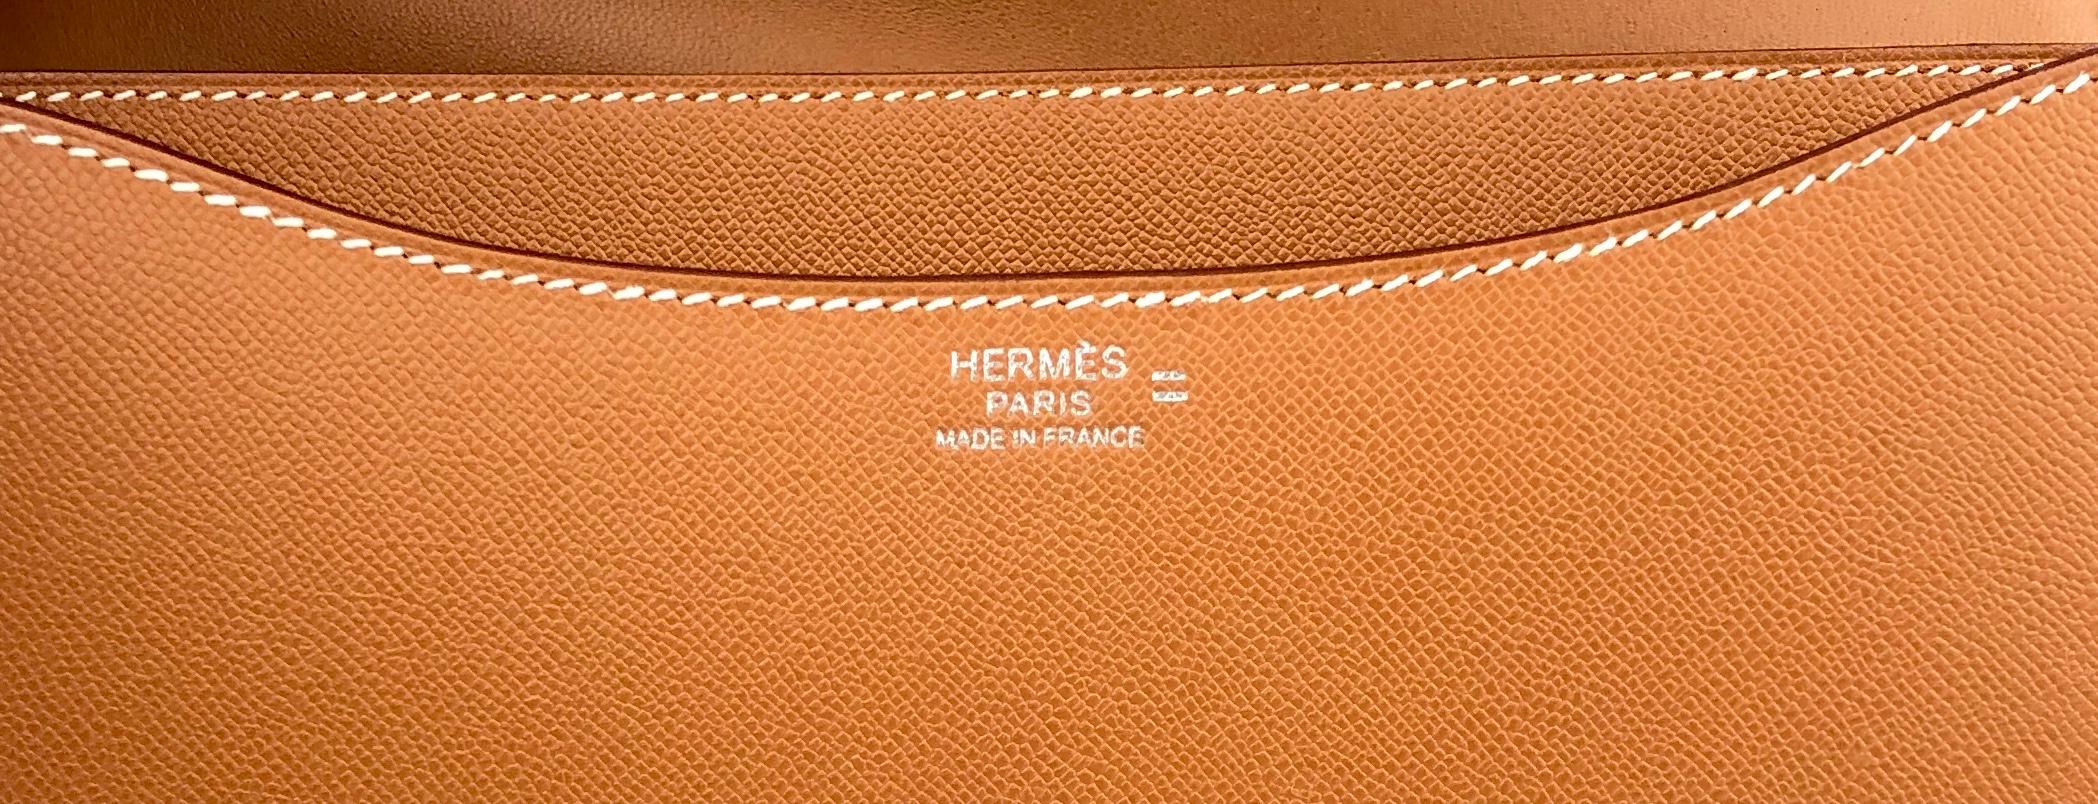 hermès constance bag price 2021